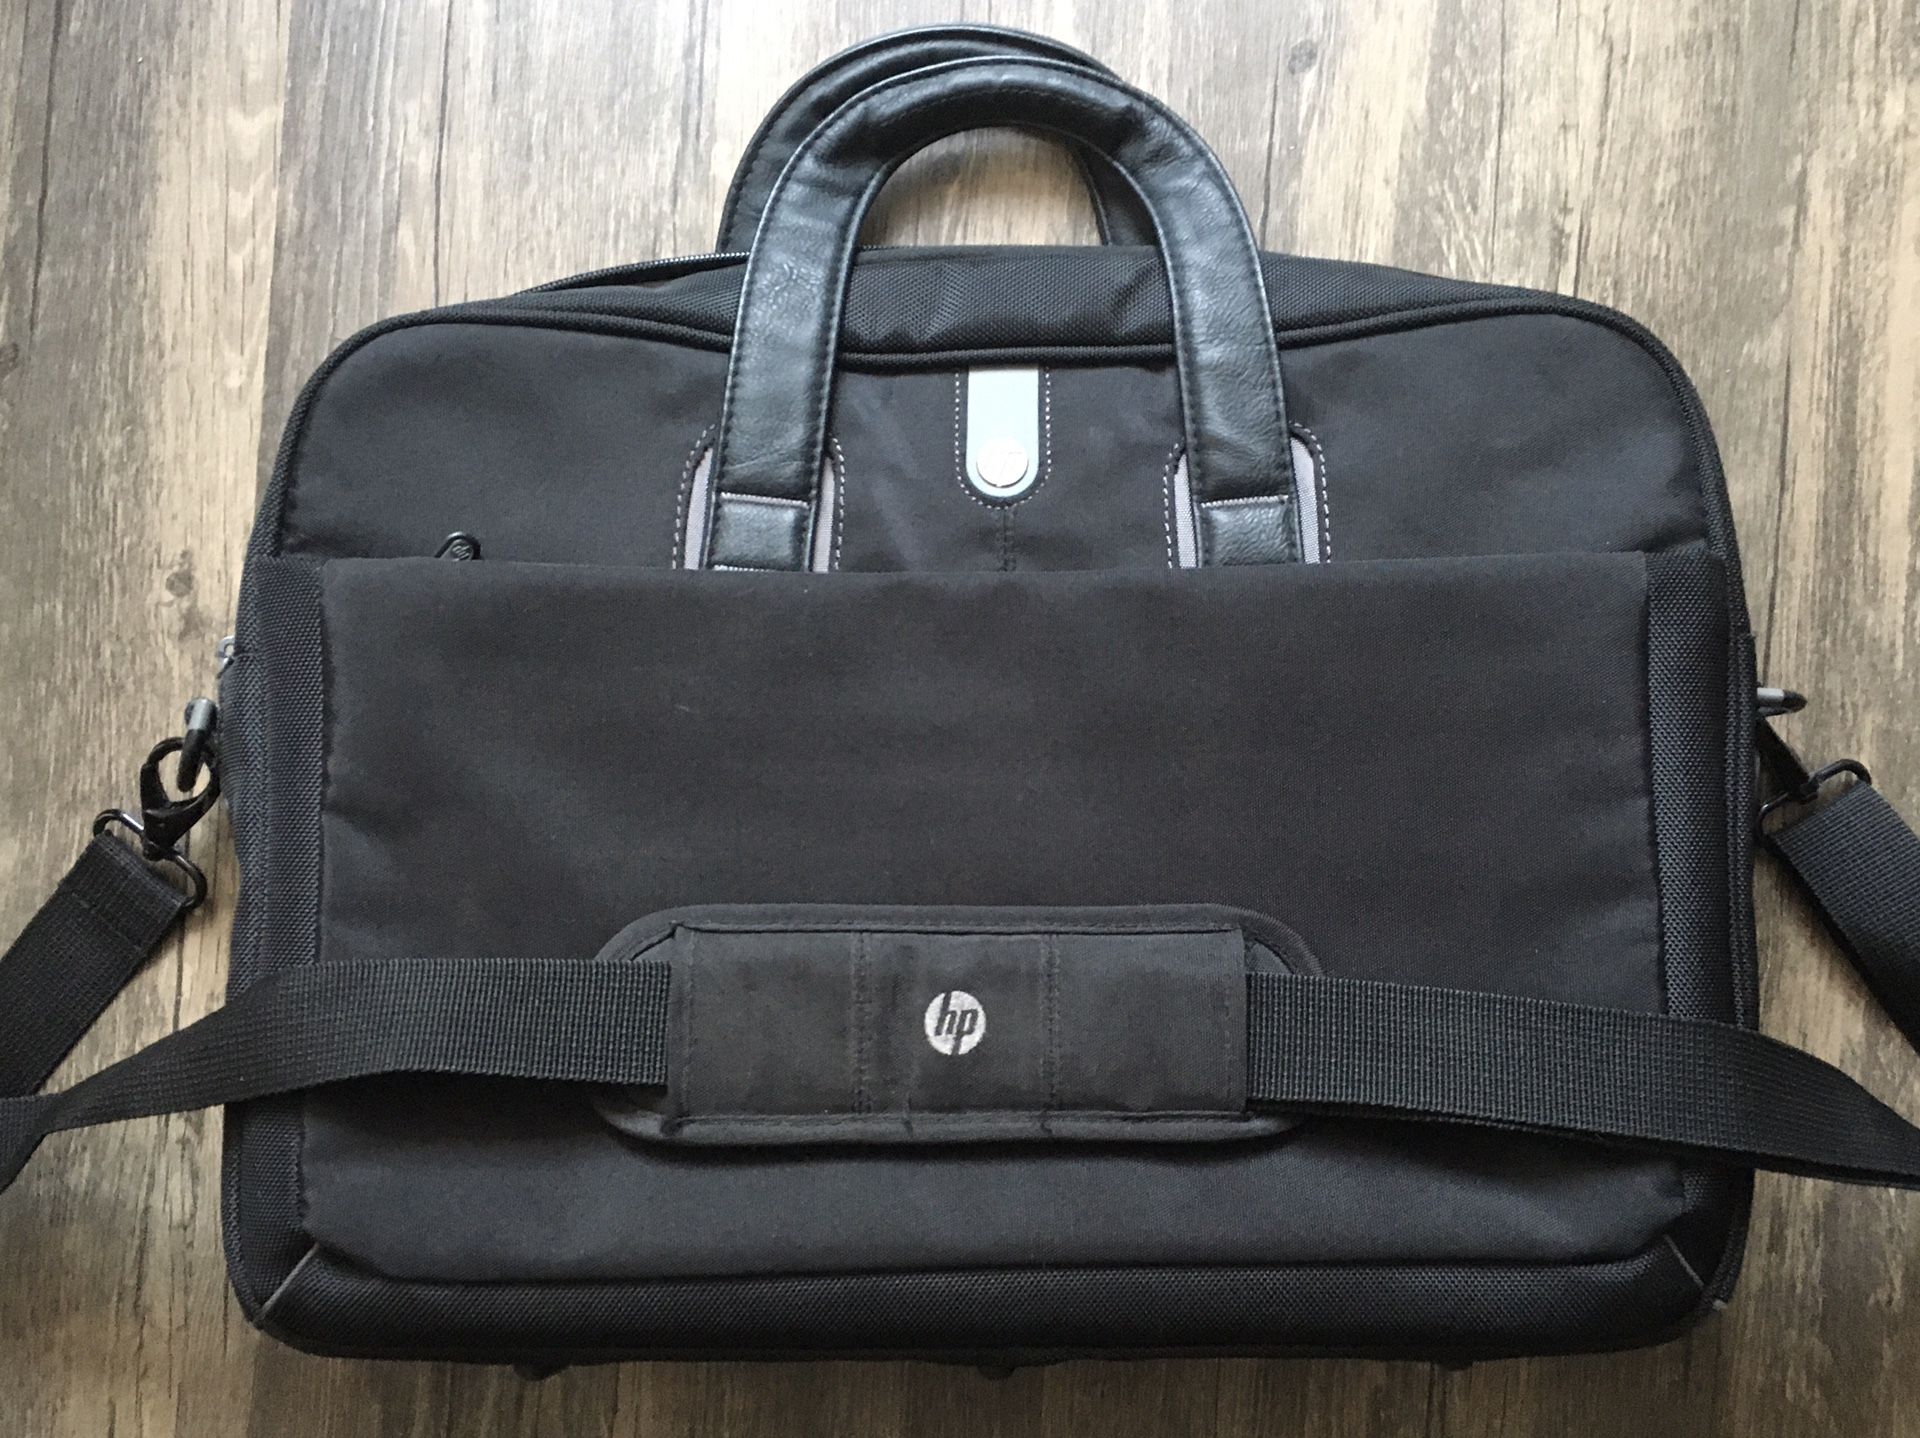 (Pending Sale) HP 17” Laptop Bag